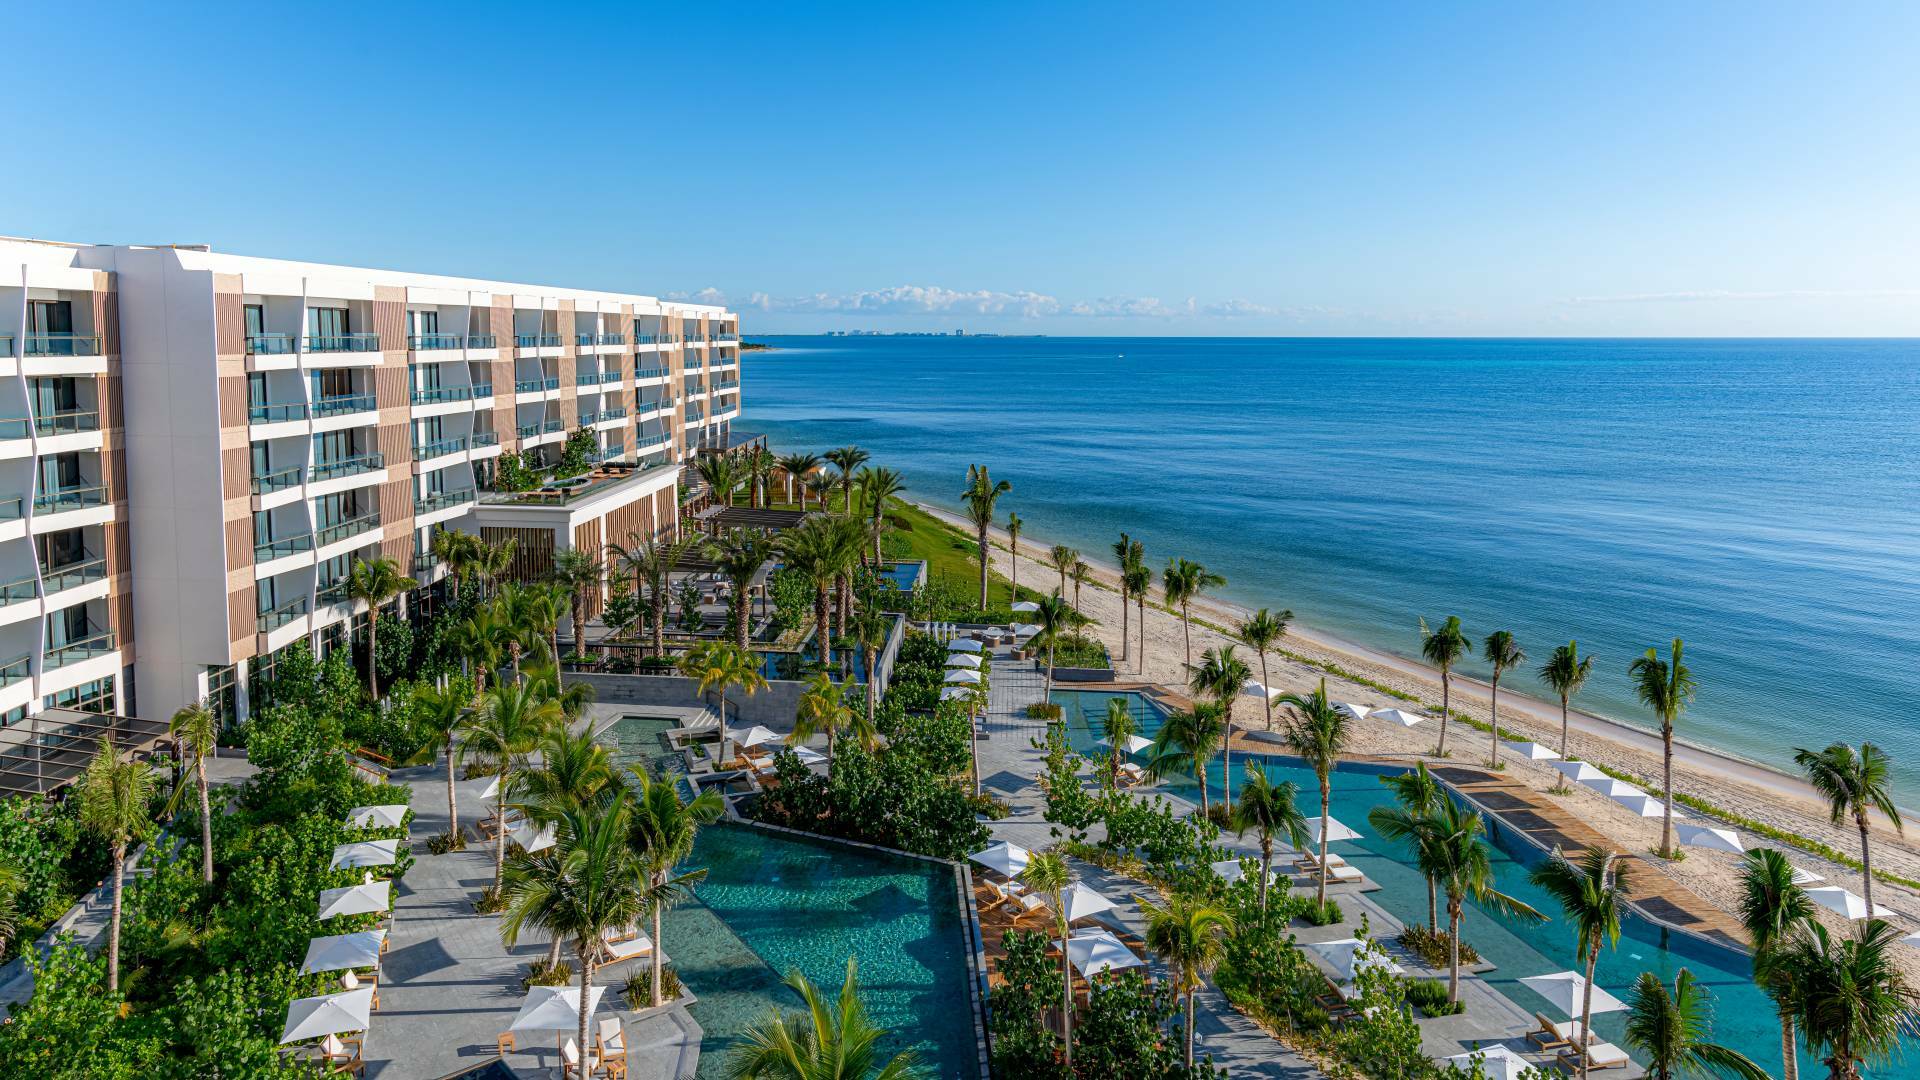 Photo of Waldorf Astoria Cancun, Cancun, Mexico